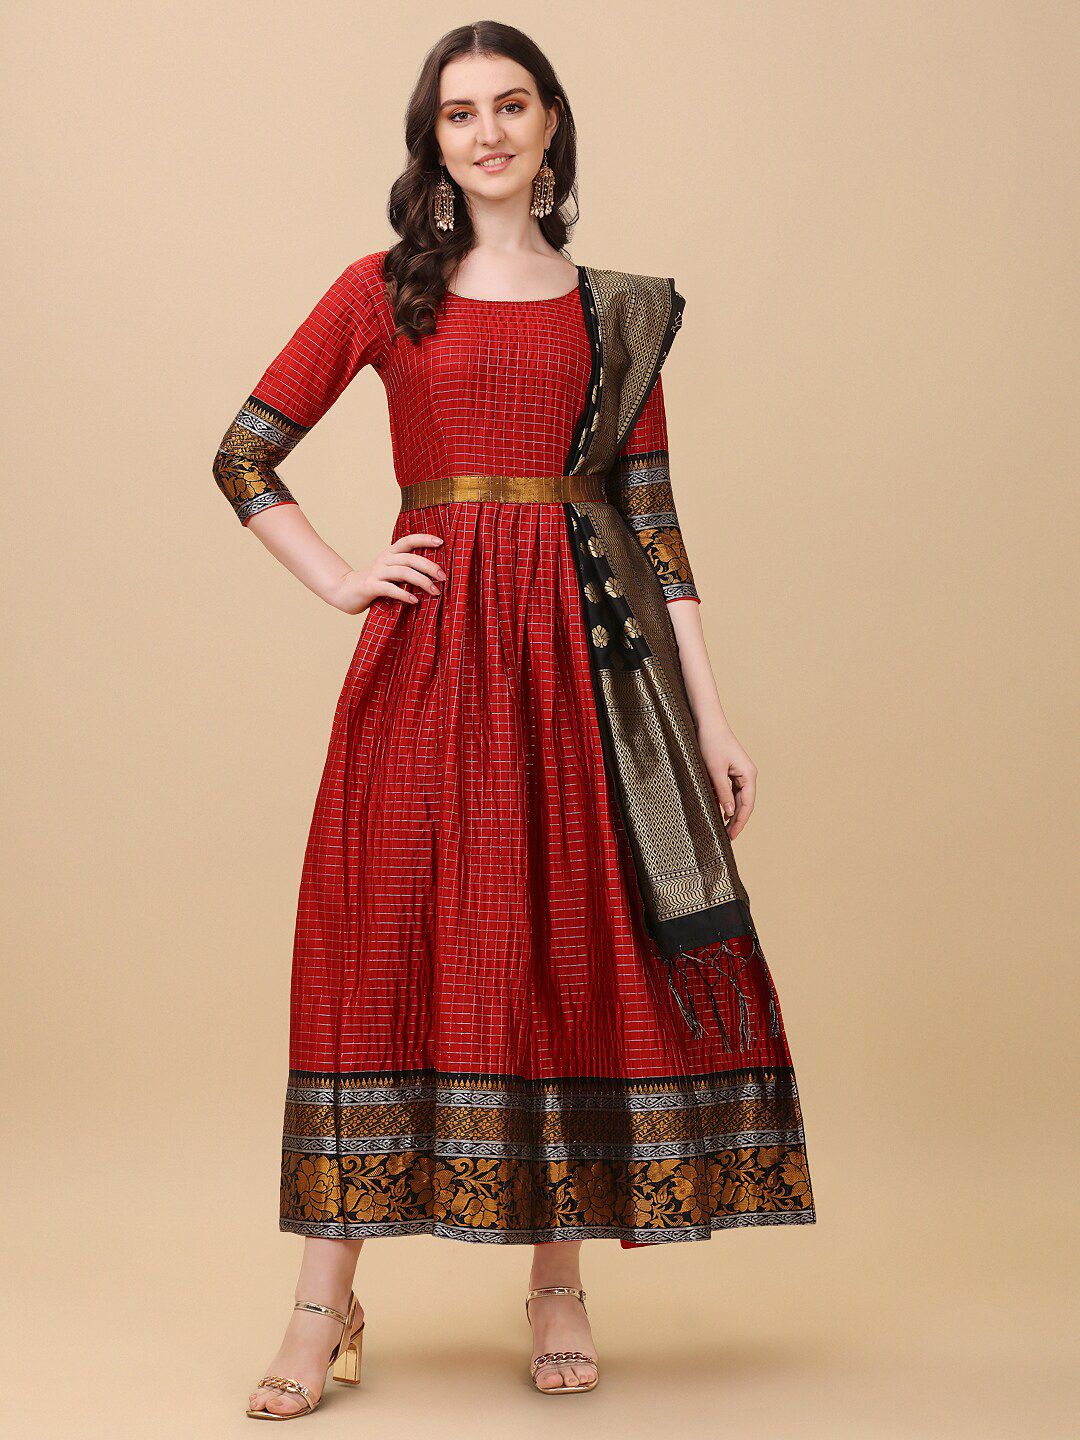 Vidraa Western Store Maroon Ethnic Motifs Jacquard Ethnic Maxi Dress Price in India